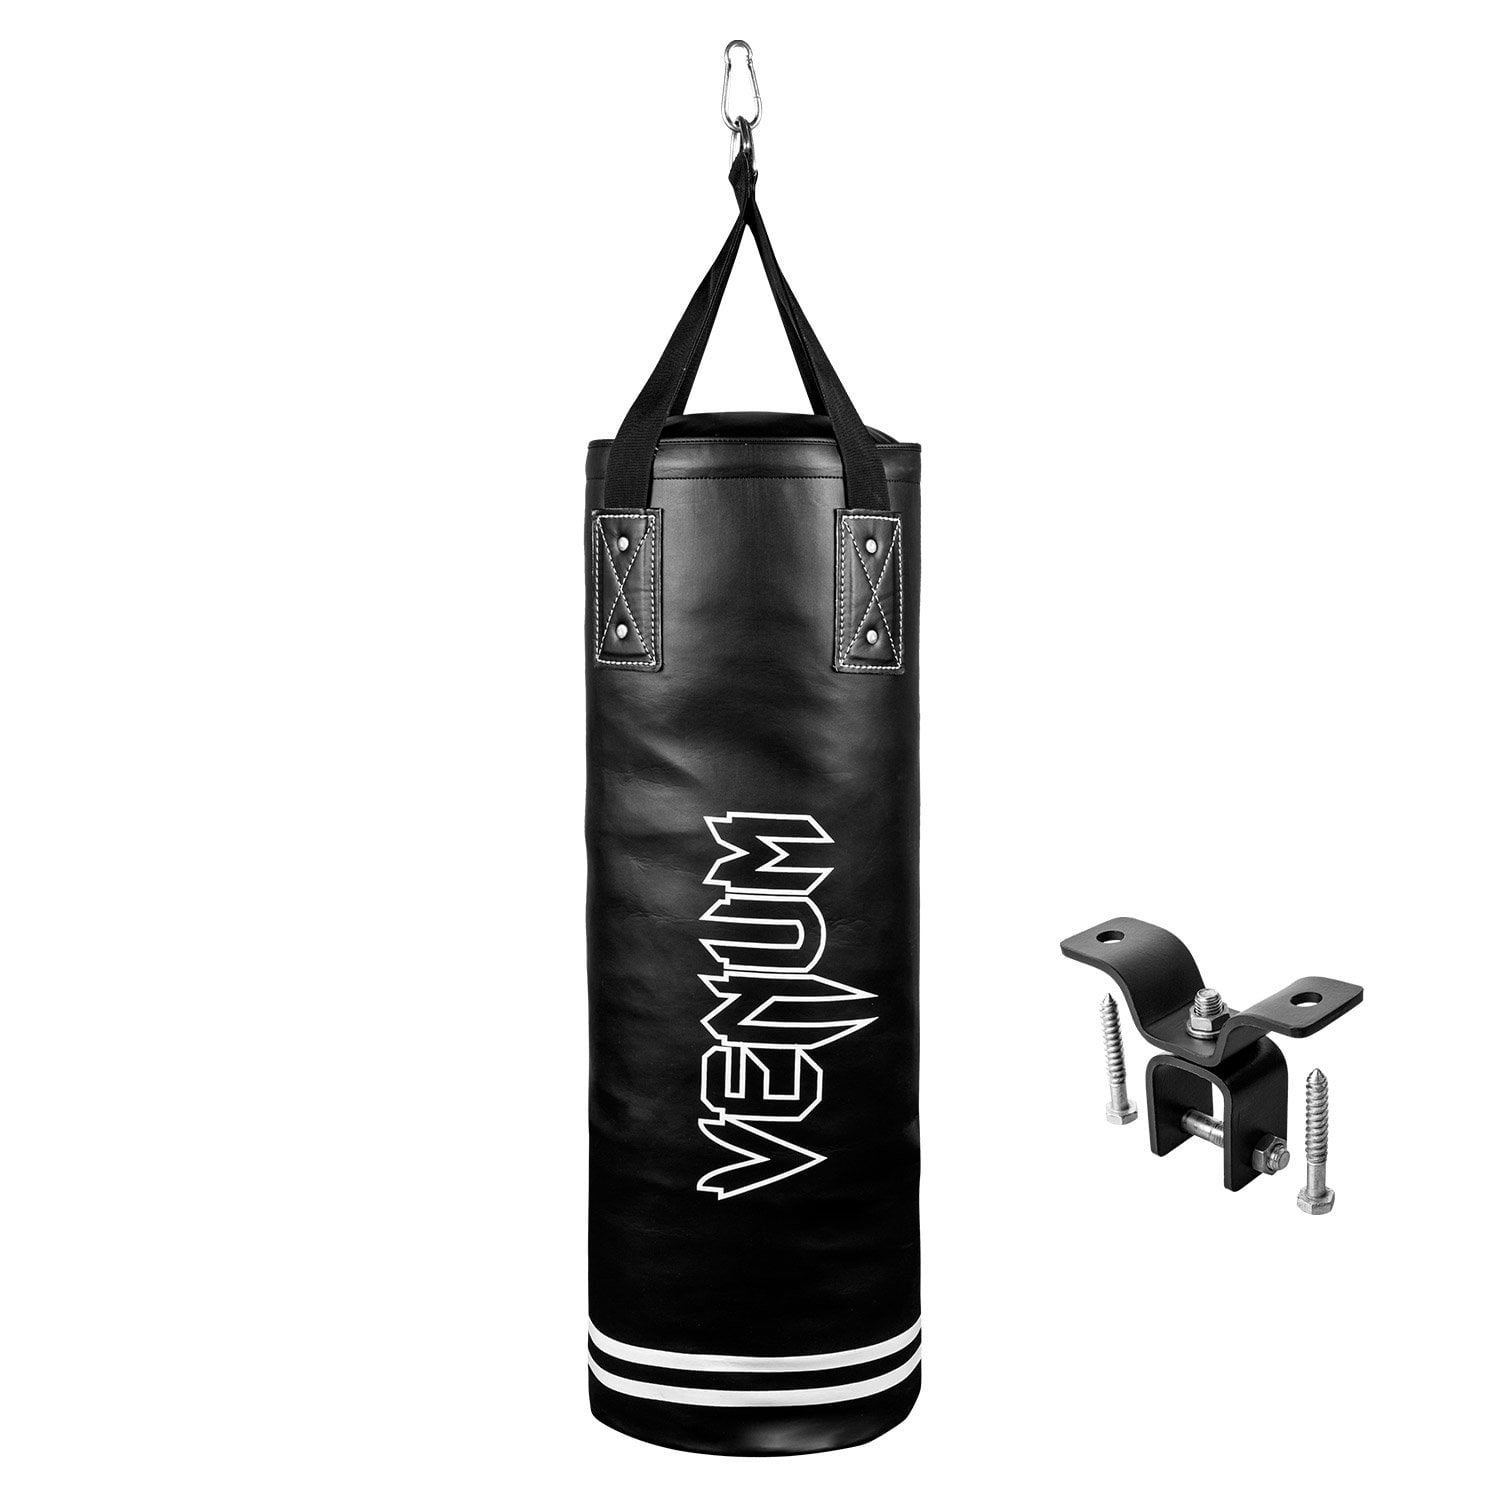 Venum Classic Boxing Punching Bag - 70 lbs - Black/White - Heavy Bag Kit